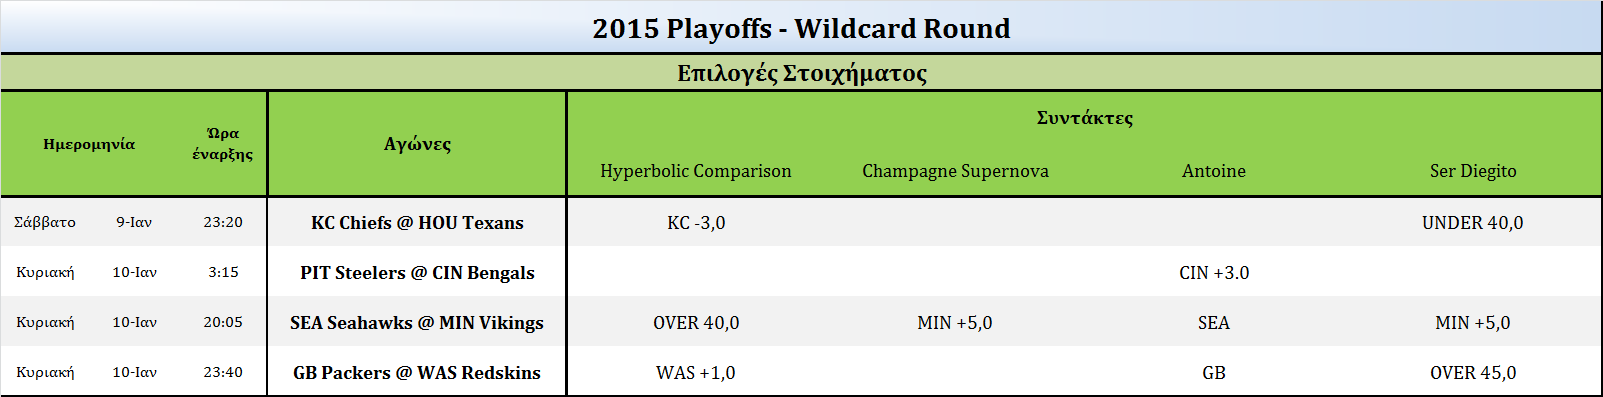 wildcard week 2015 bets